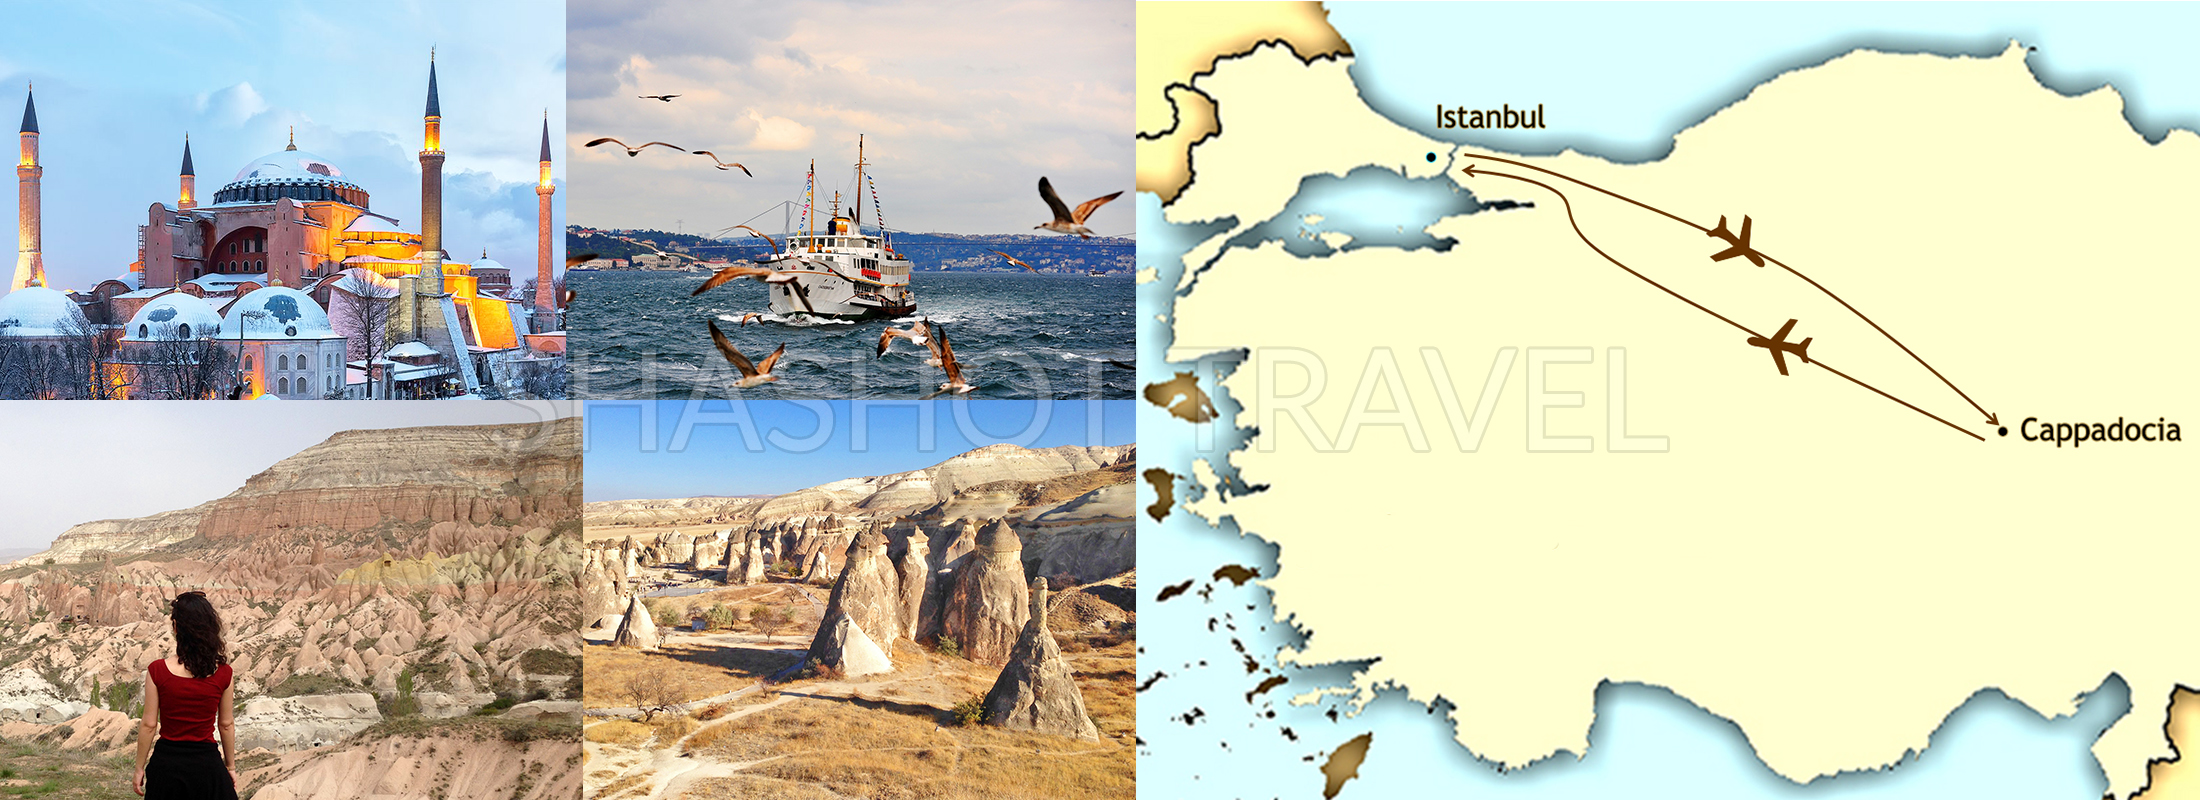 6-days-turkey-package-tours-istanbul-cappadocia-shashot-travel-turkiye-map